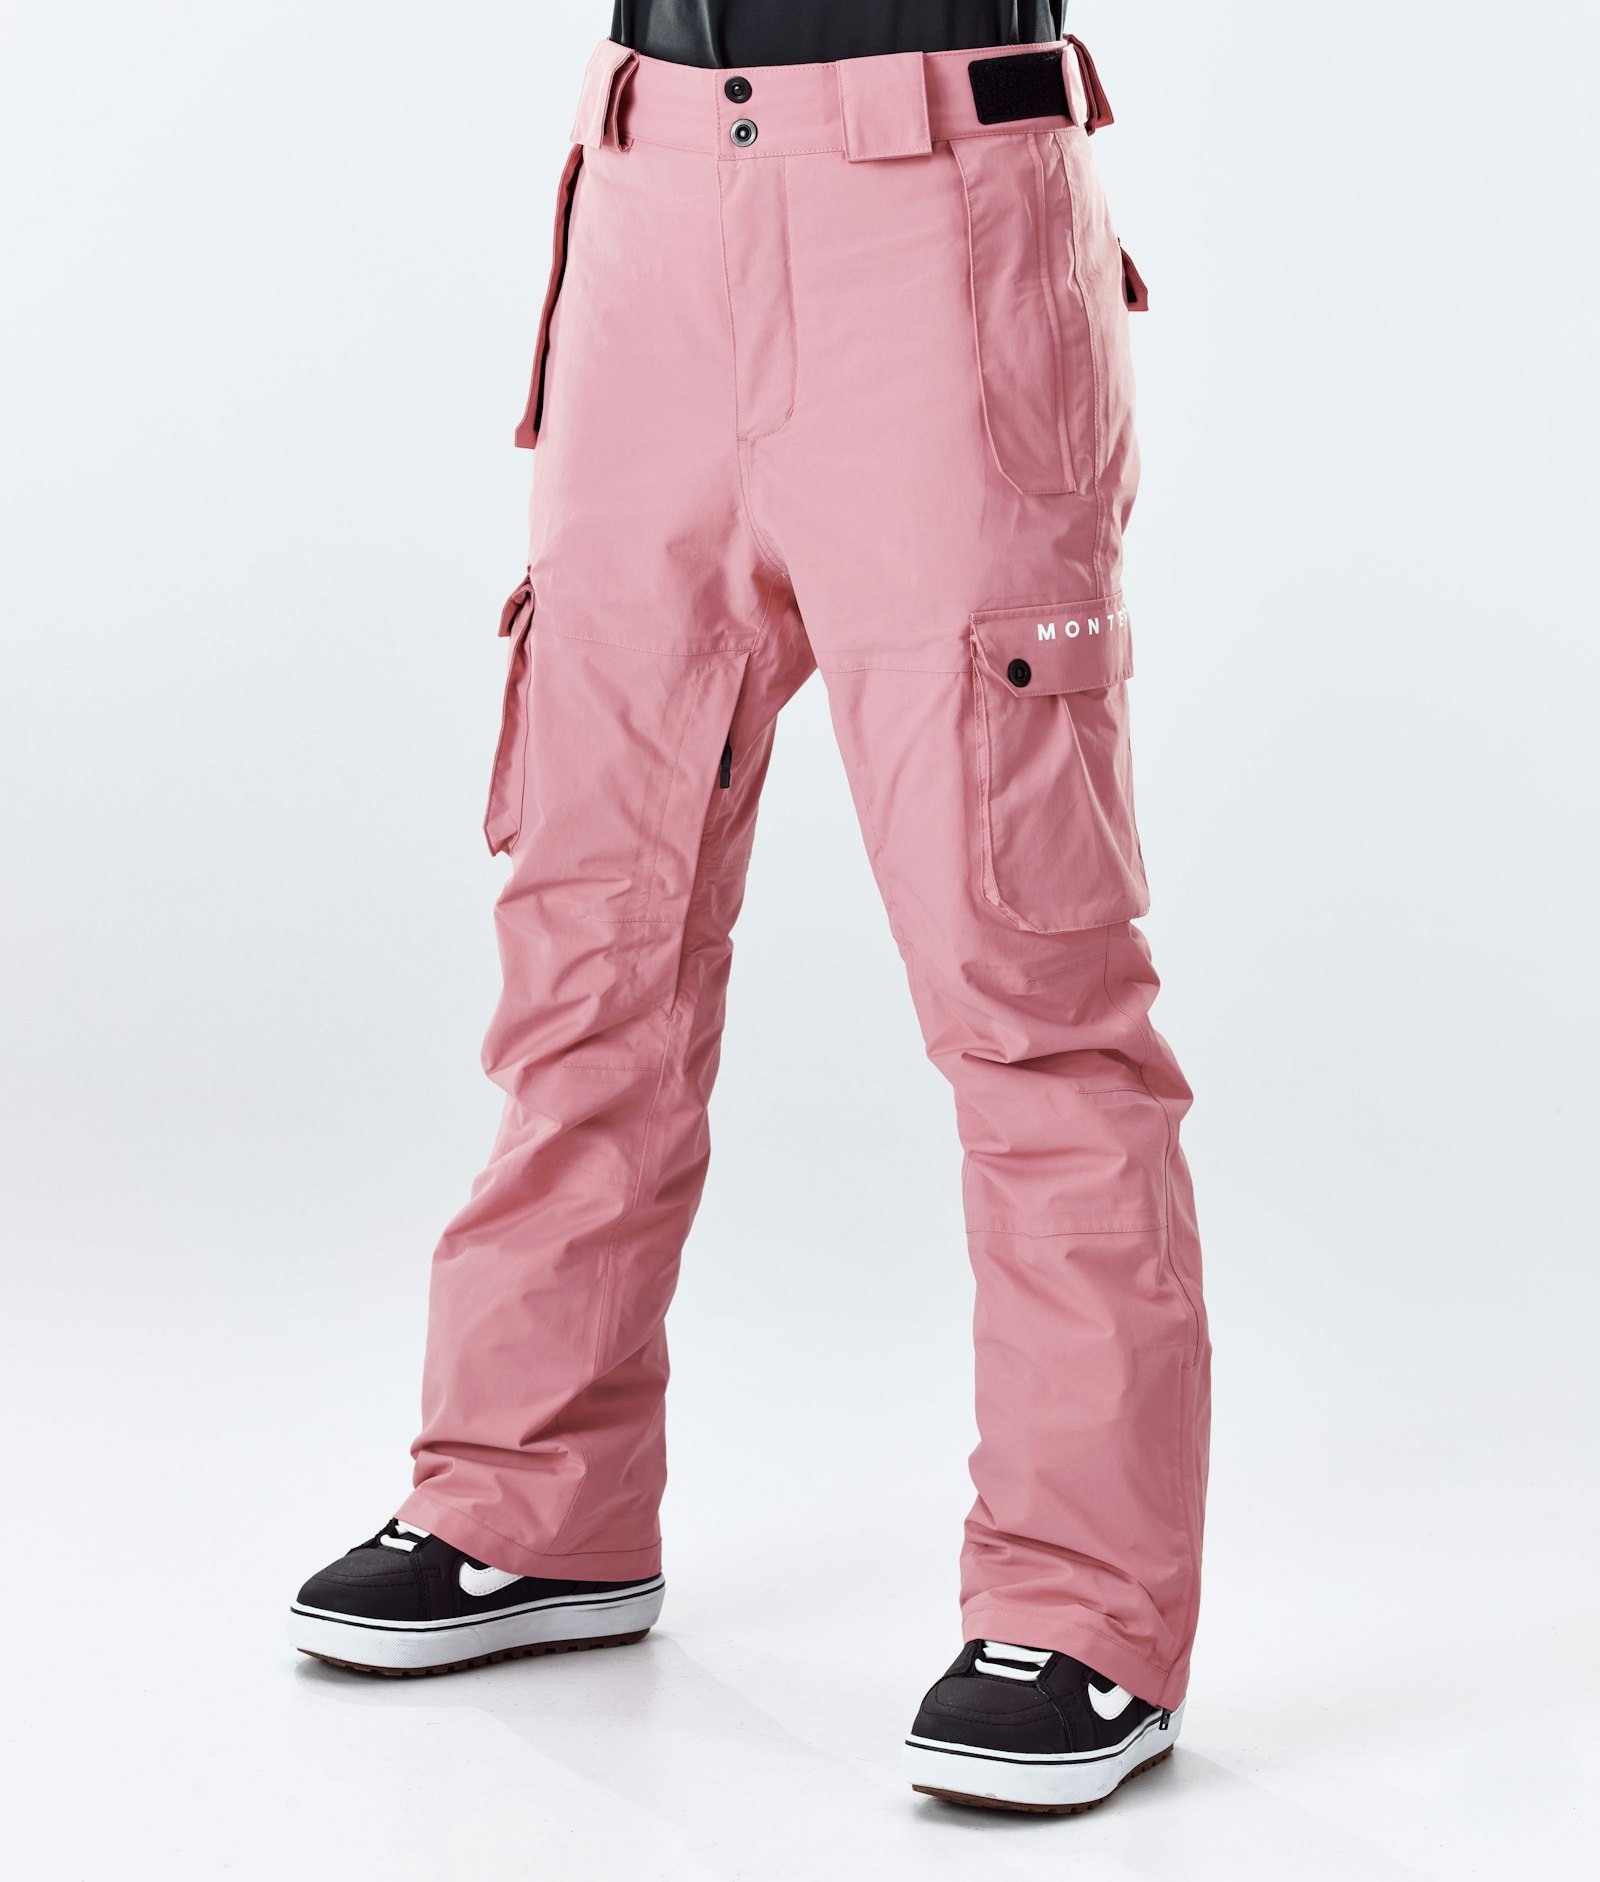 Doom W 2020 Snowboard Pants Women Pink Renewed, Image 1 of 6